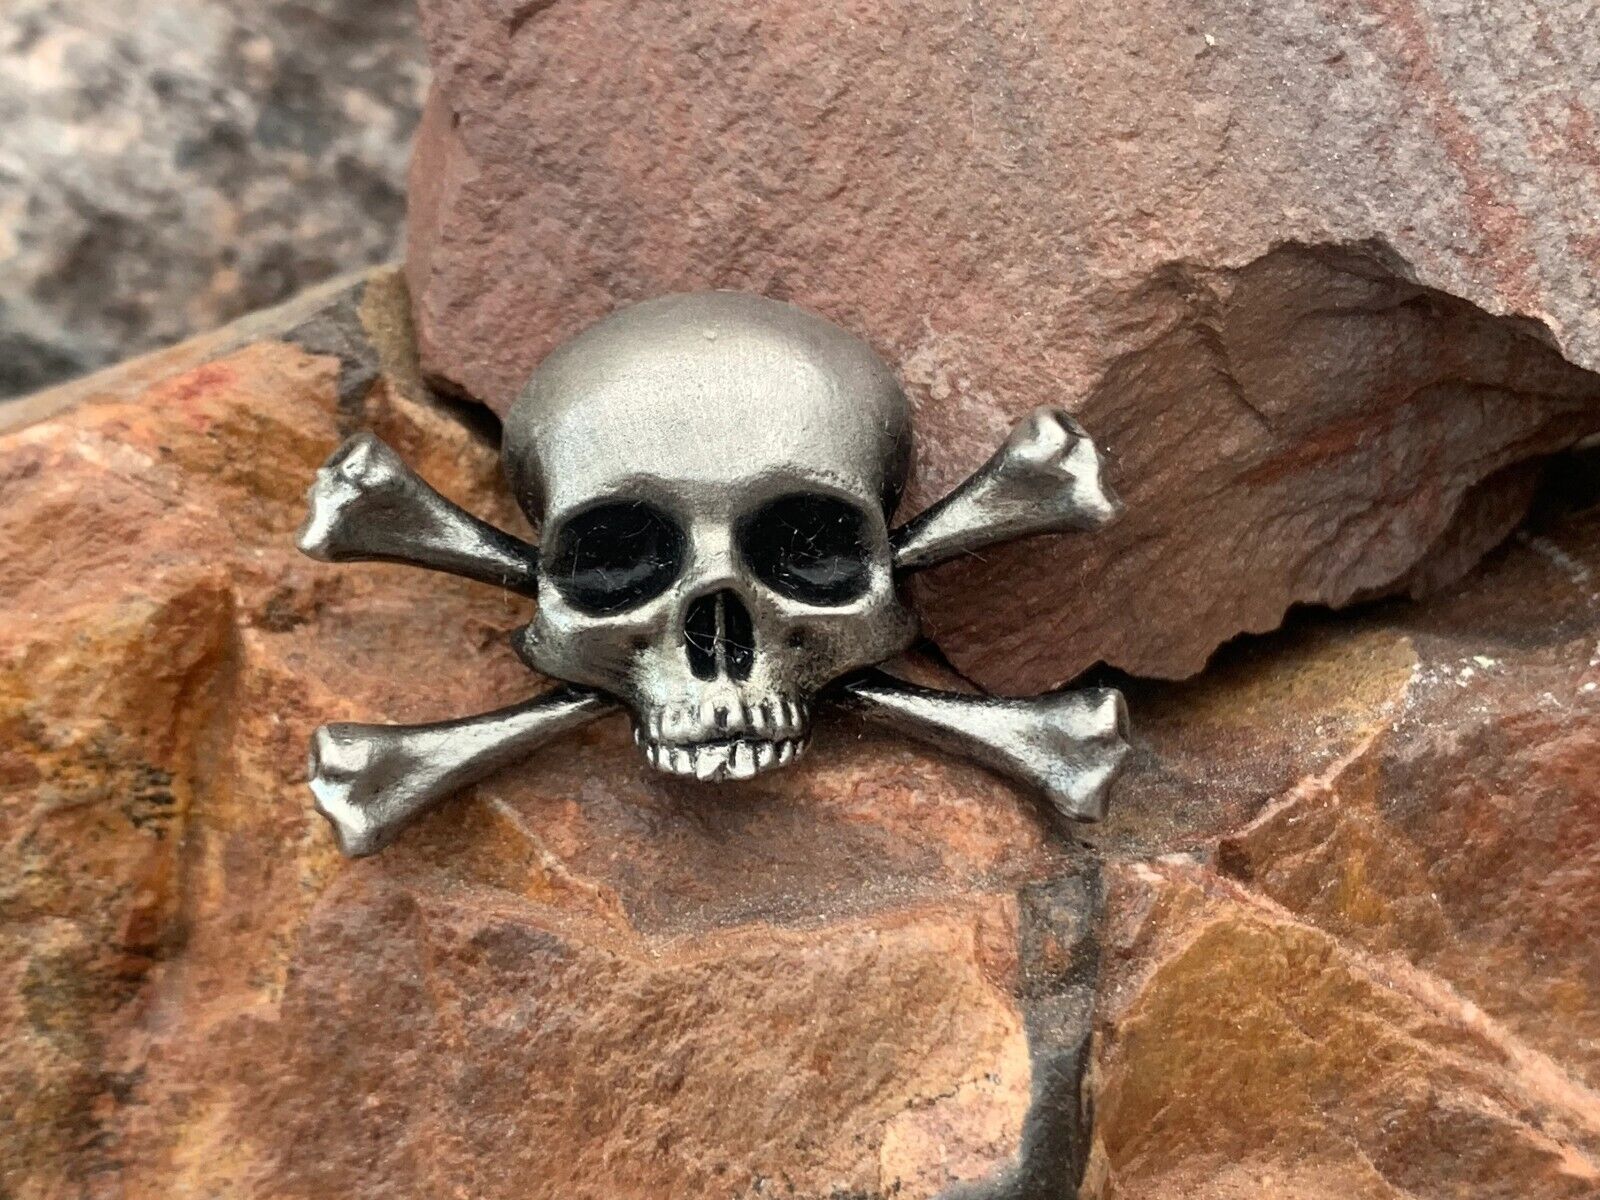 Skull and Cross bones badge